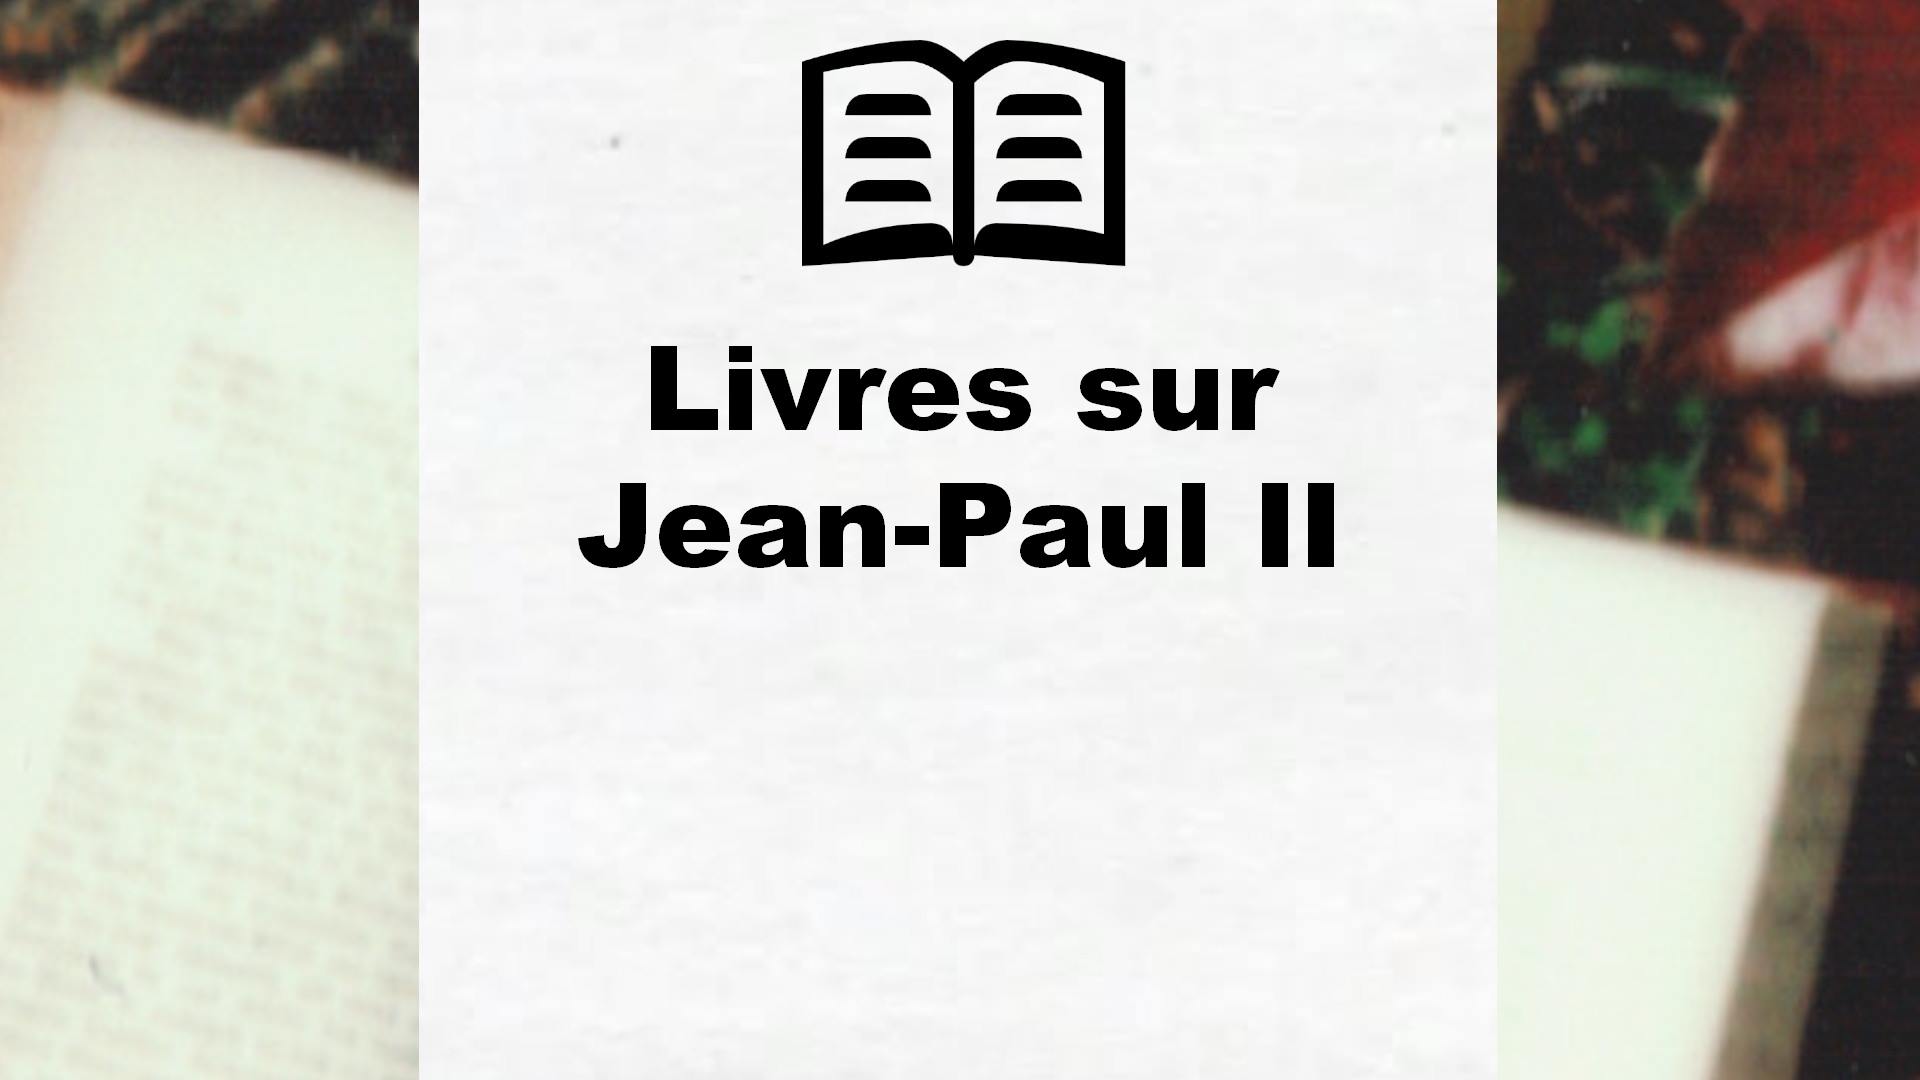 Livres sur Jean-Paul II